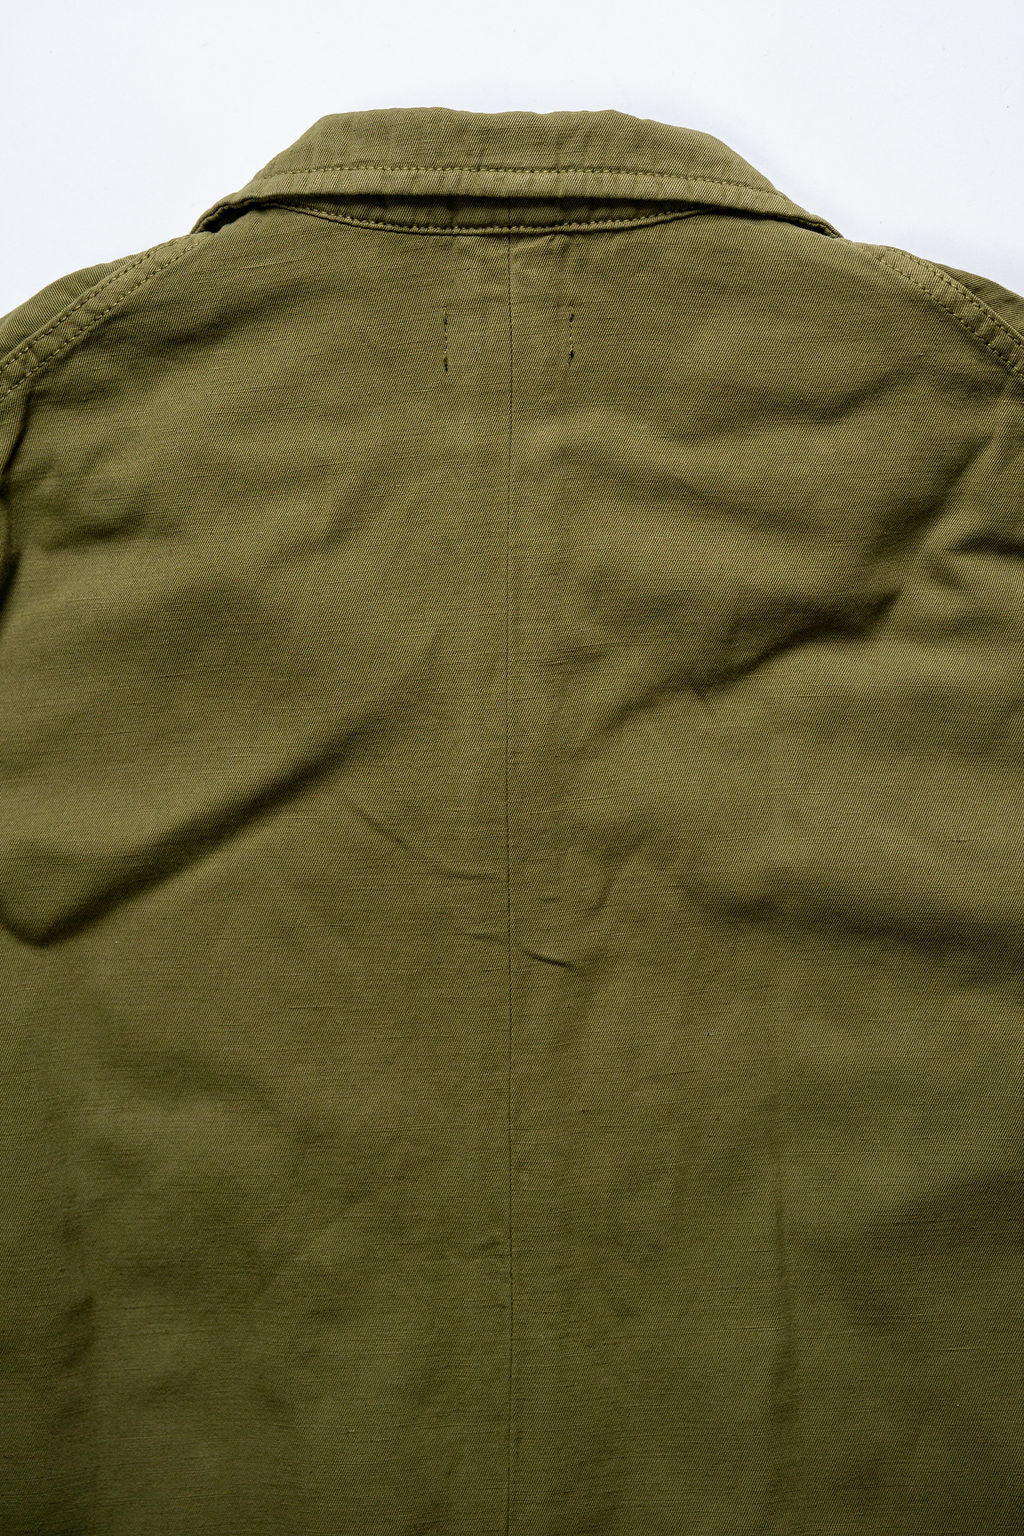 C.O.F. Studio Painter Jacket - Light Cotton Linen Olive